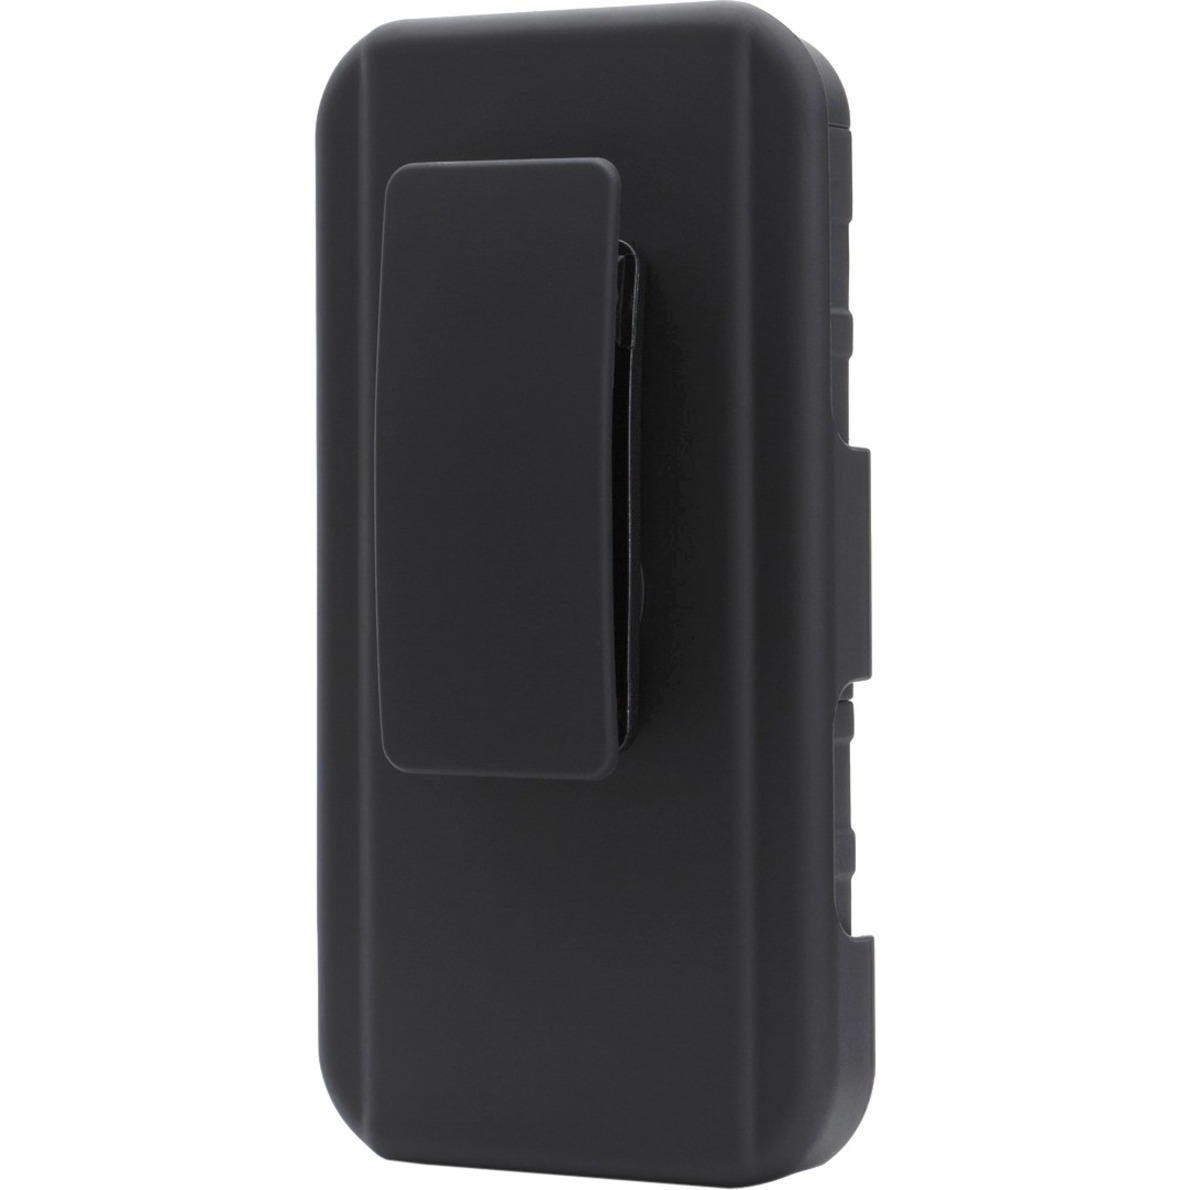 i-Blason Prime Carrying Case (Holster) Apple iPhone 5c Smartphone, Black - image 1 of 4